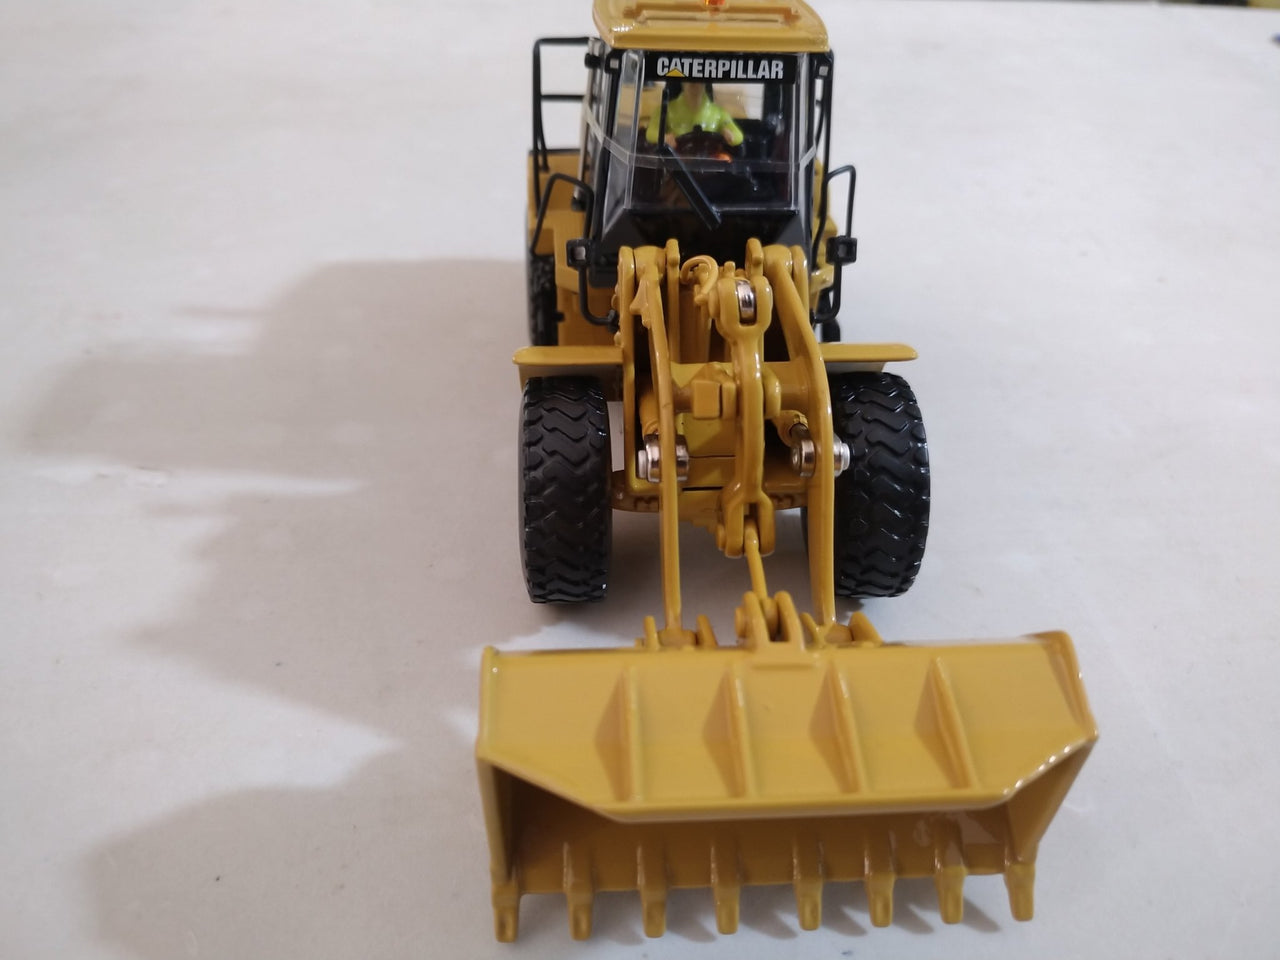 85196C Caterpillar 950H Wheel Loader 1:50 Scale